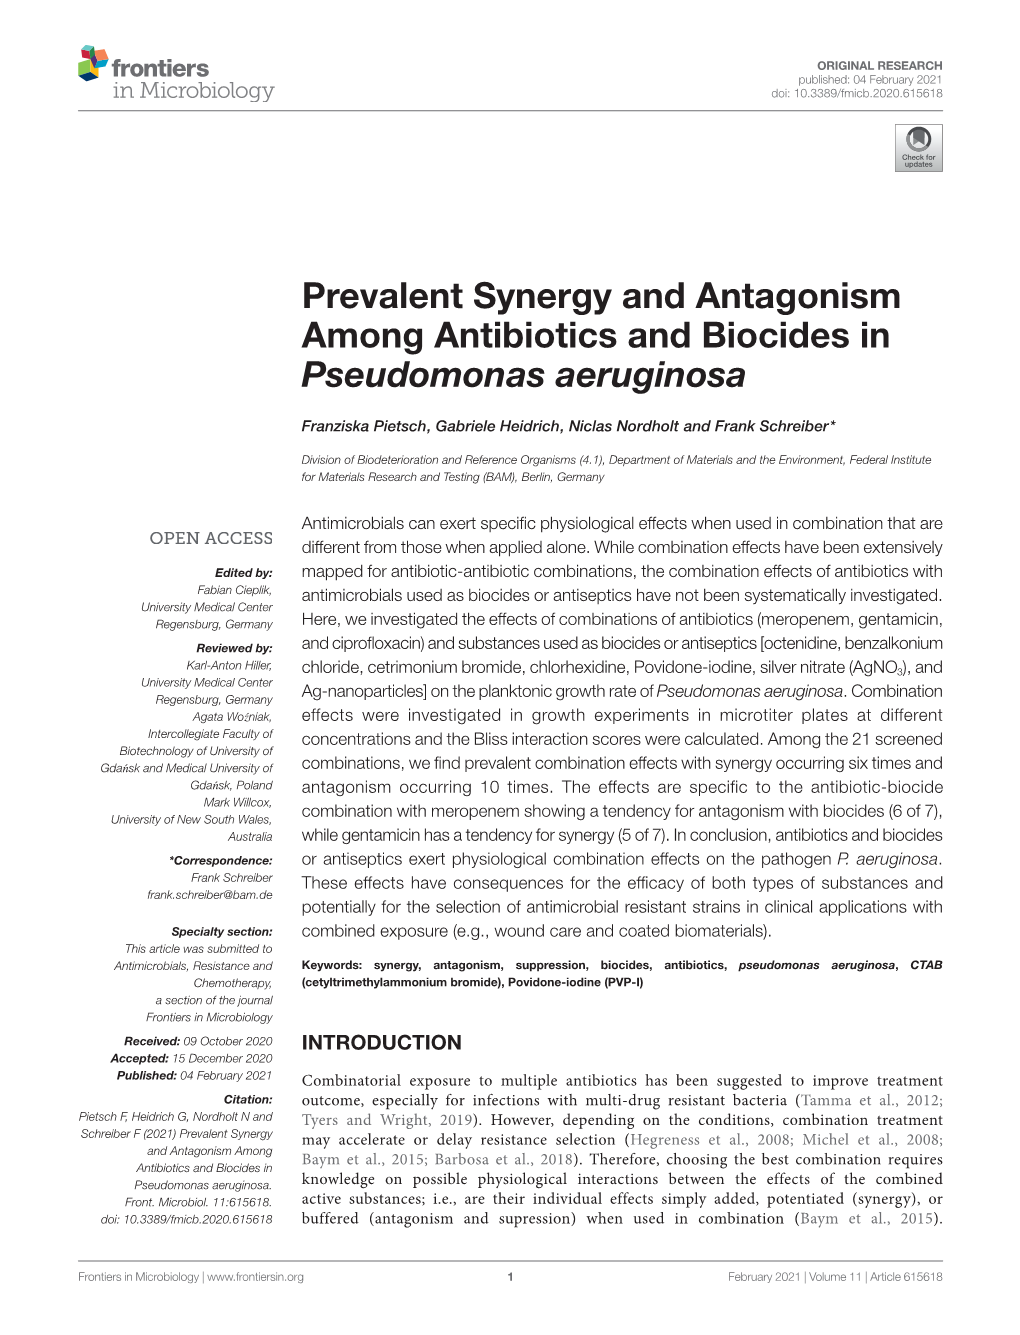 Prevalent Synergy and Antagonism Among Antibiotics and Biocides in Pseudomonas Aeruginosa